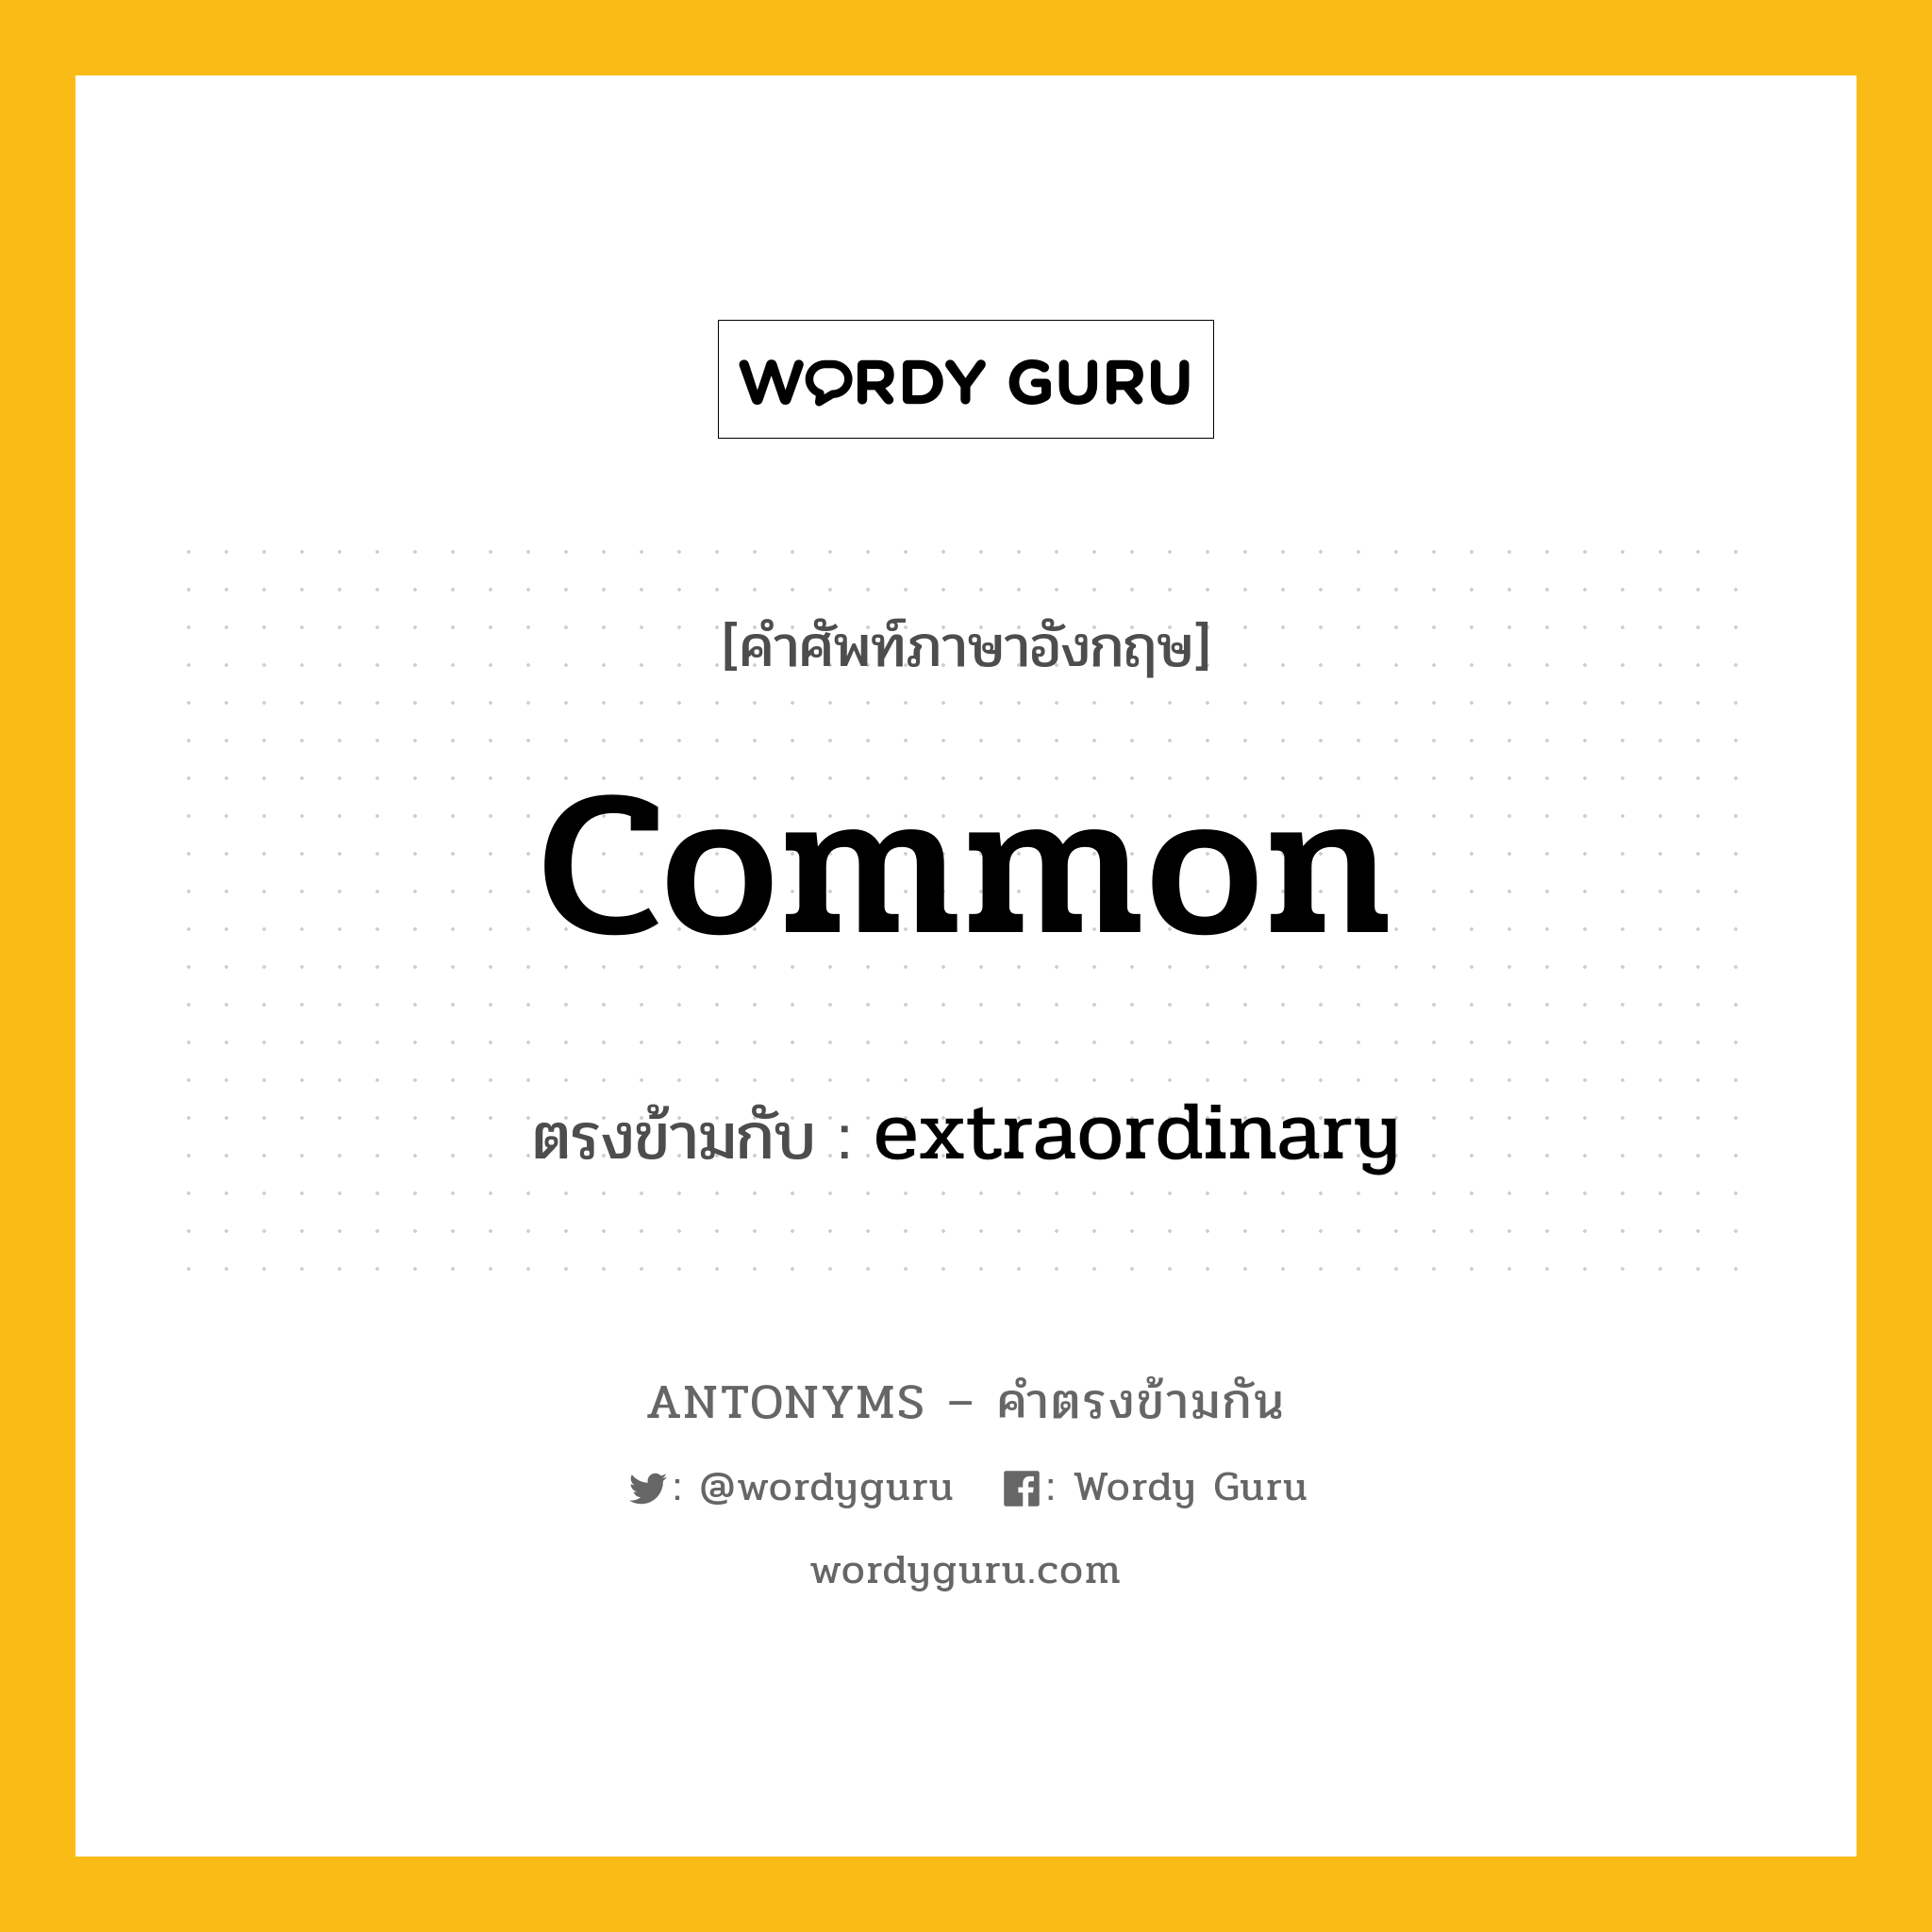 common เป็นคำตรงข้ามกับคำไหนบ้าง?, คำศัพท์ภาษาอังกฤษ common ตรงข้ามกับ extraordinary หมวด extraordinary